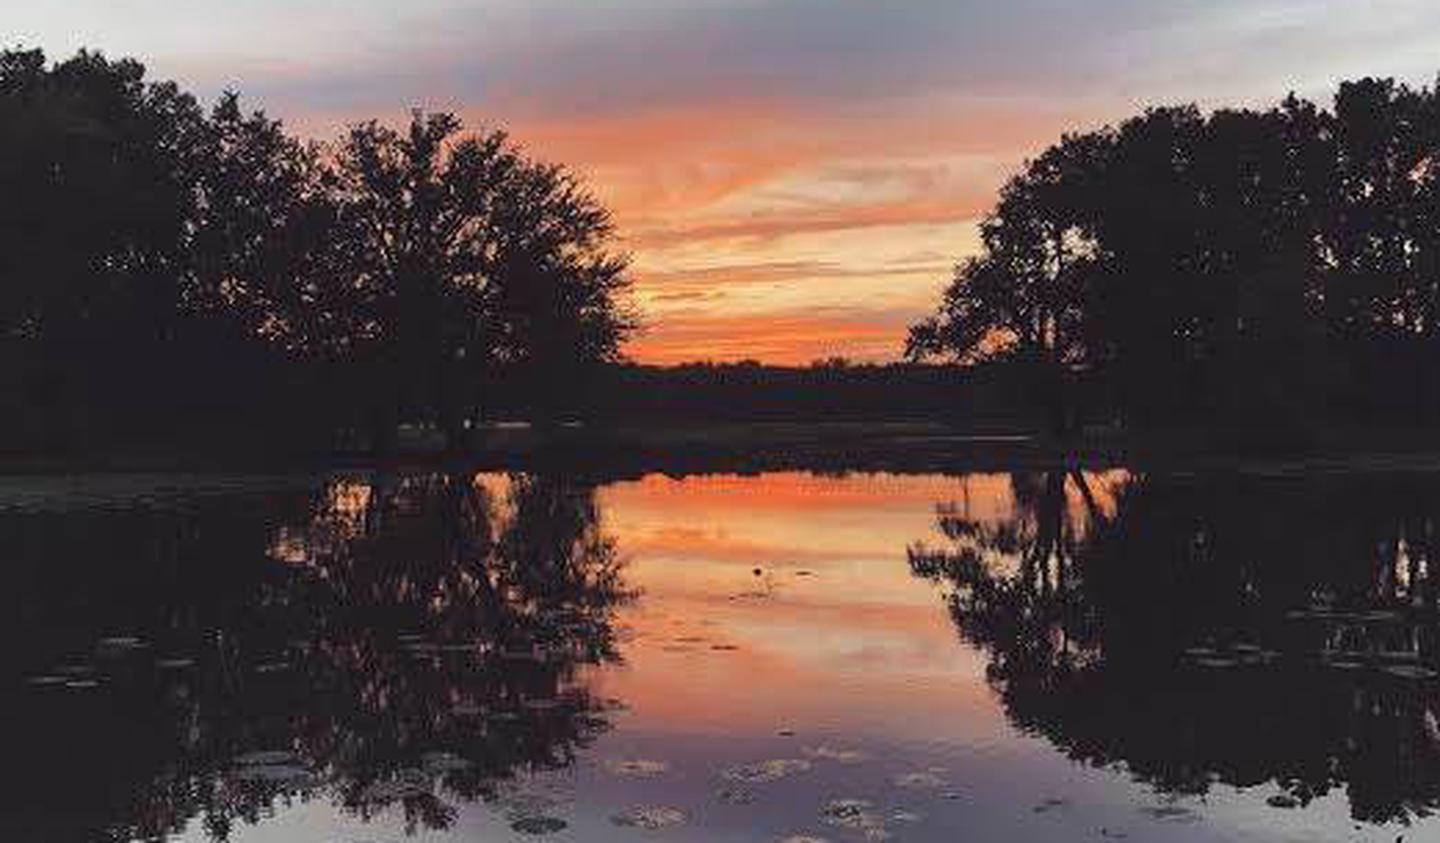 SunsetSunset along banks of the Mississippi River in Blackhawk Park.